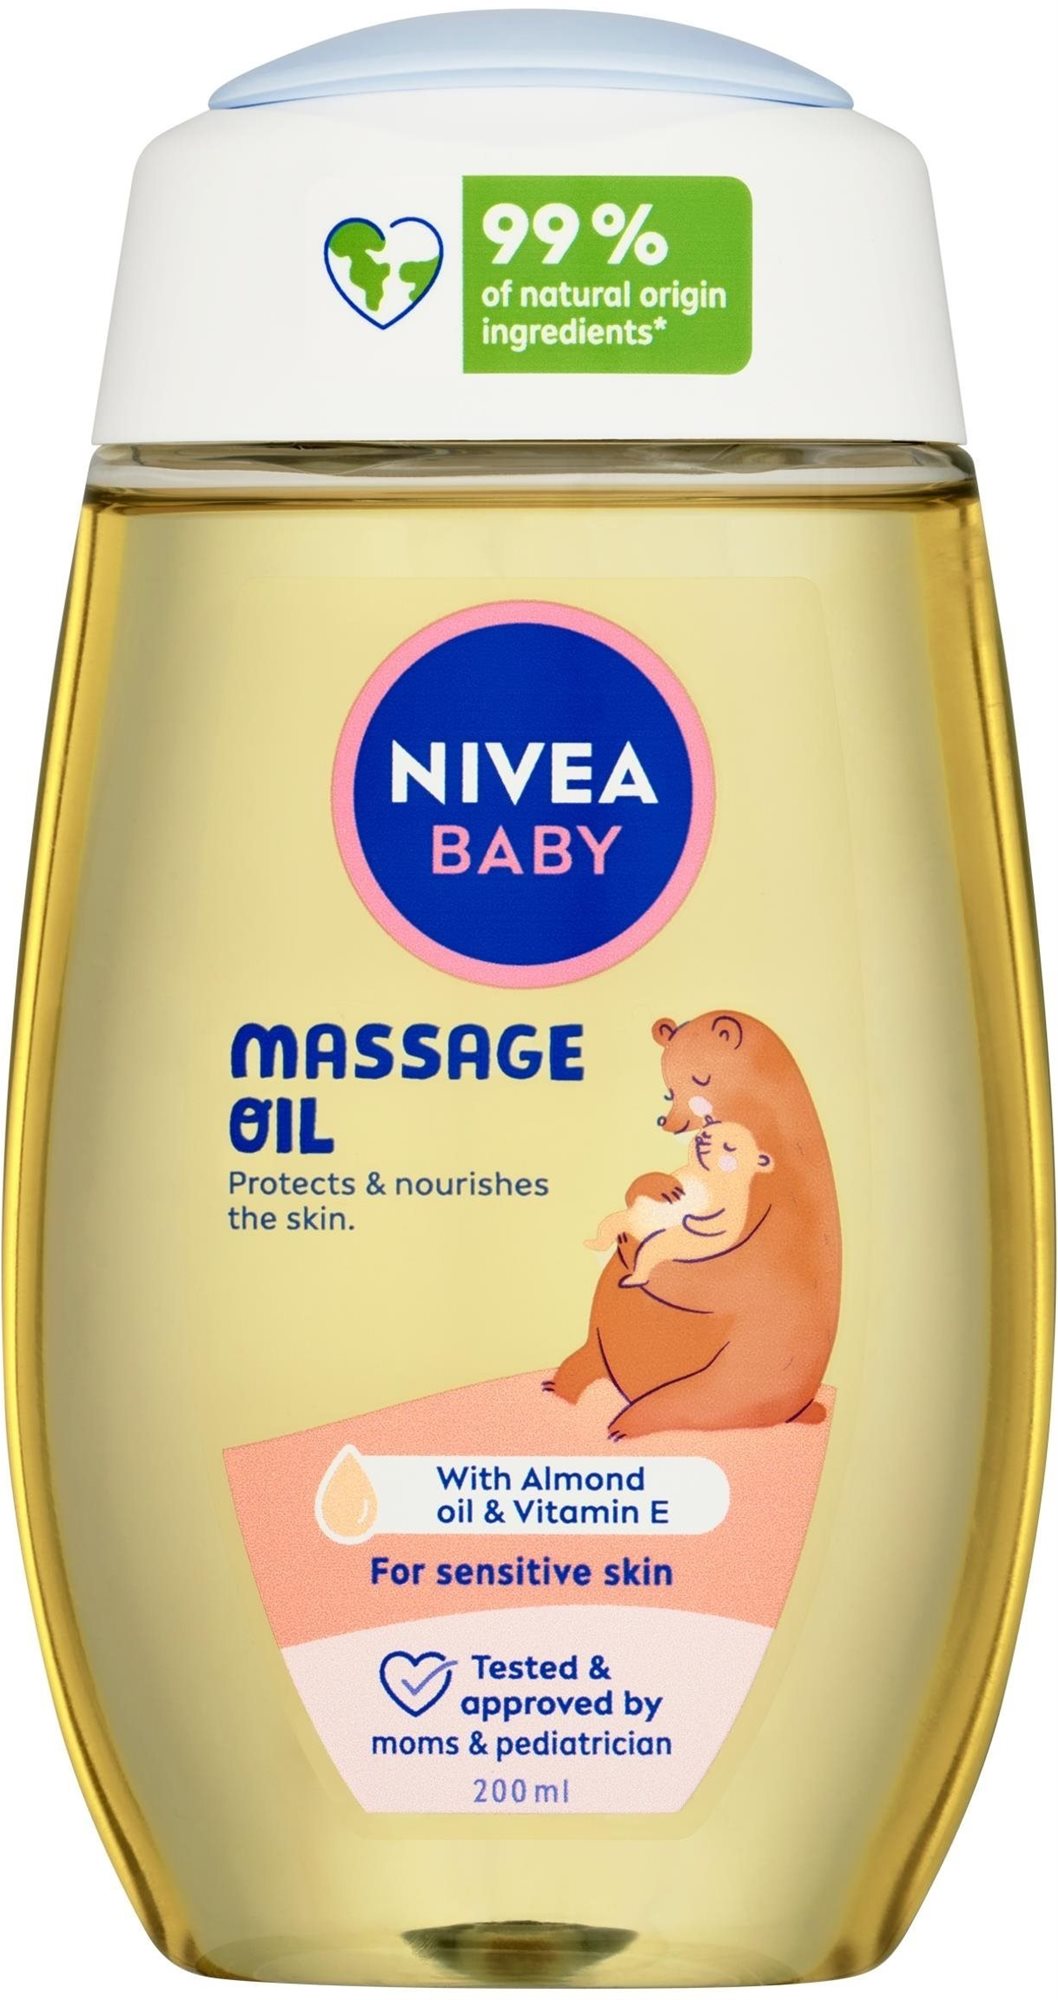 NIVEA BABY Caring Oil 200 ml